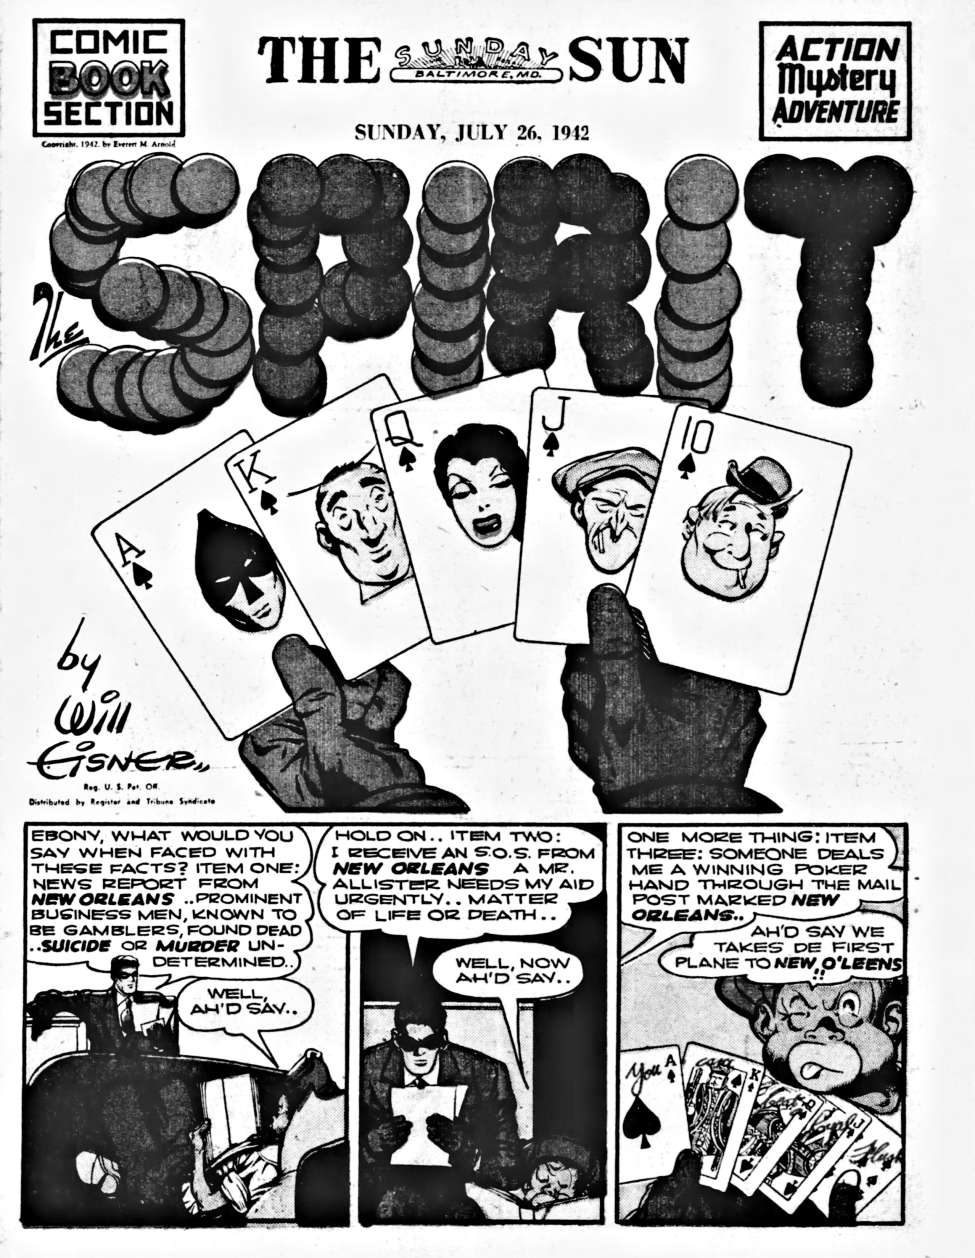 Comic Book Cover For The Spirit (1942-07-26) - Baltimore Sun (b/w)